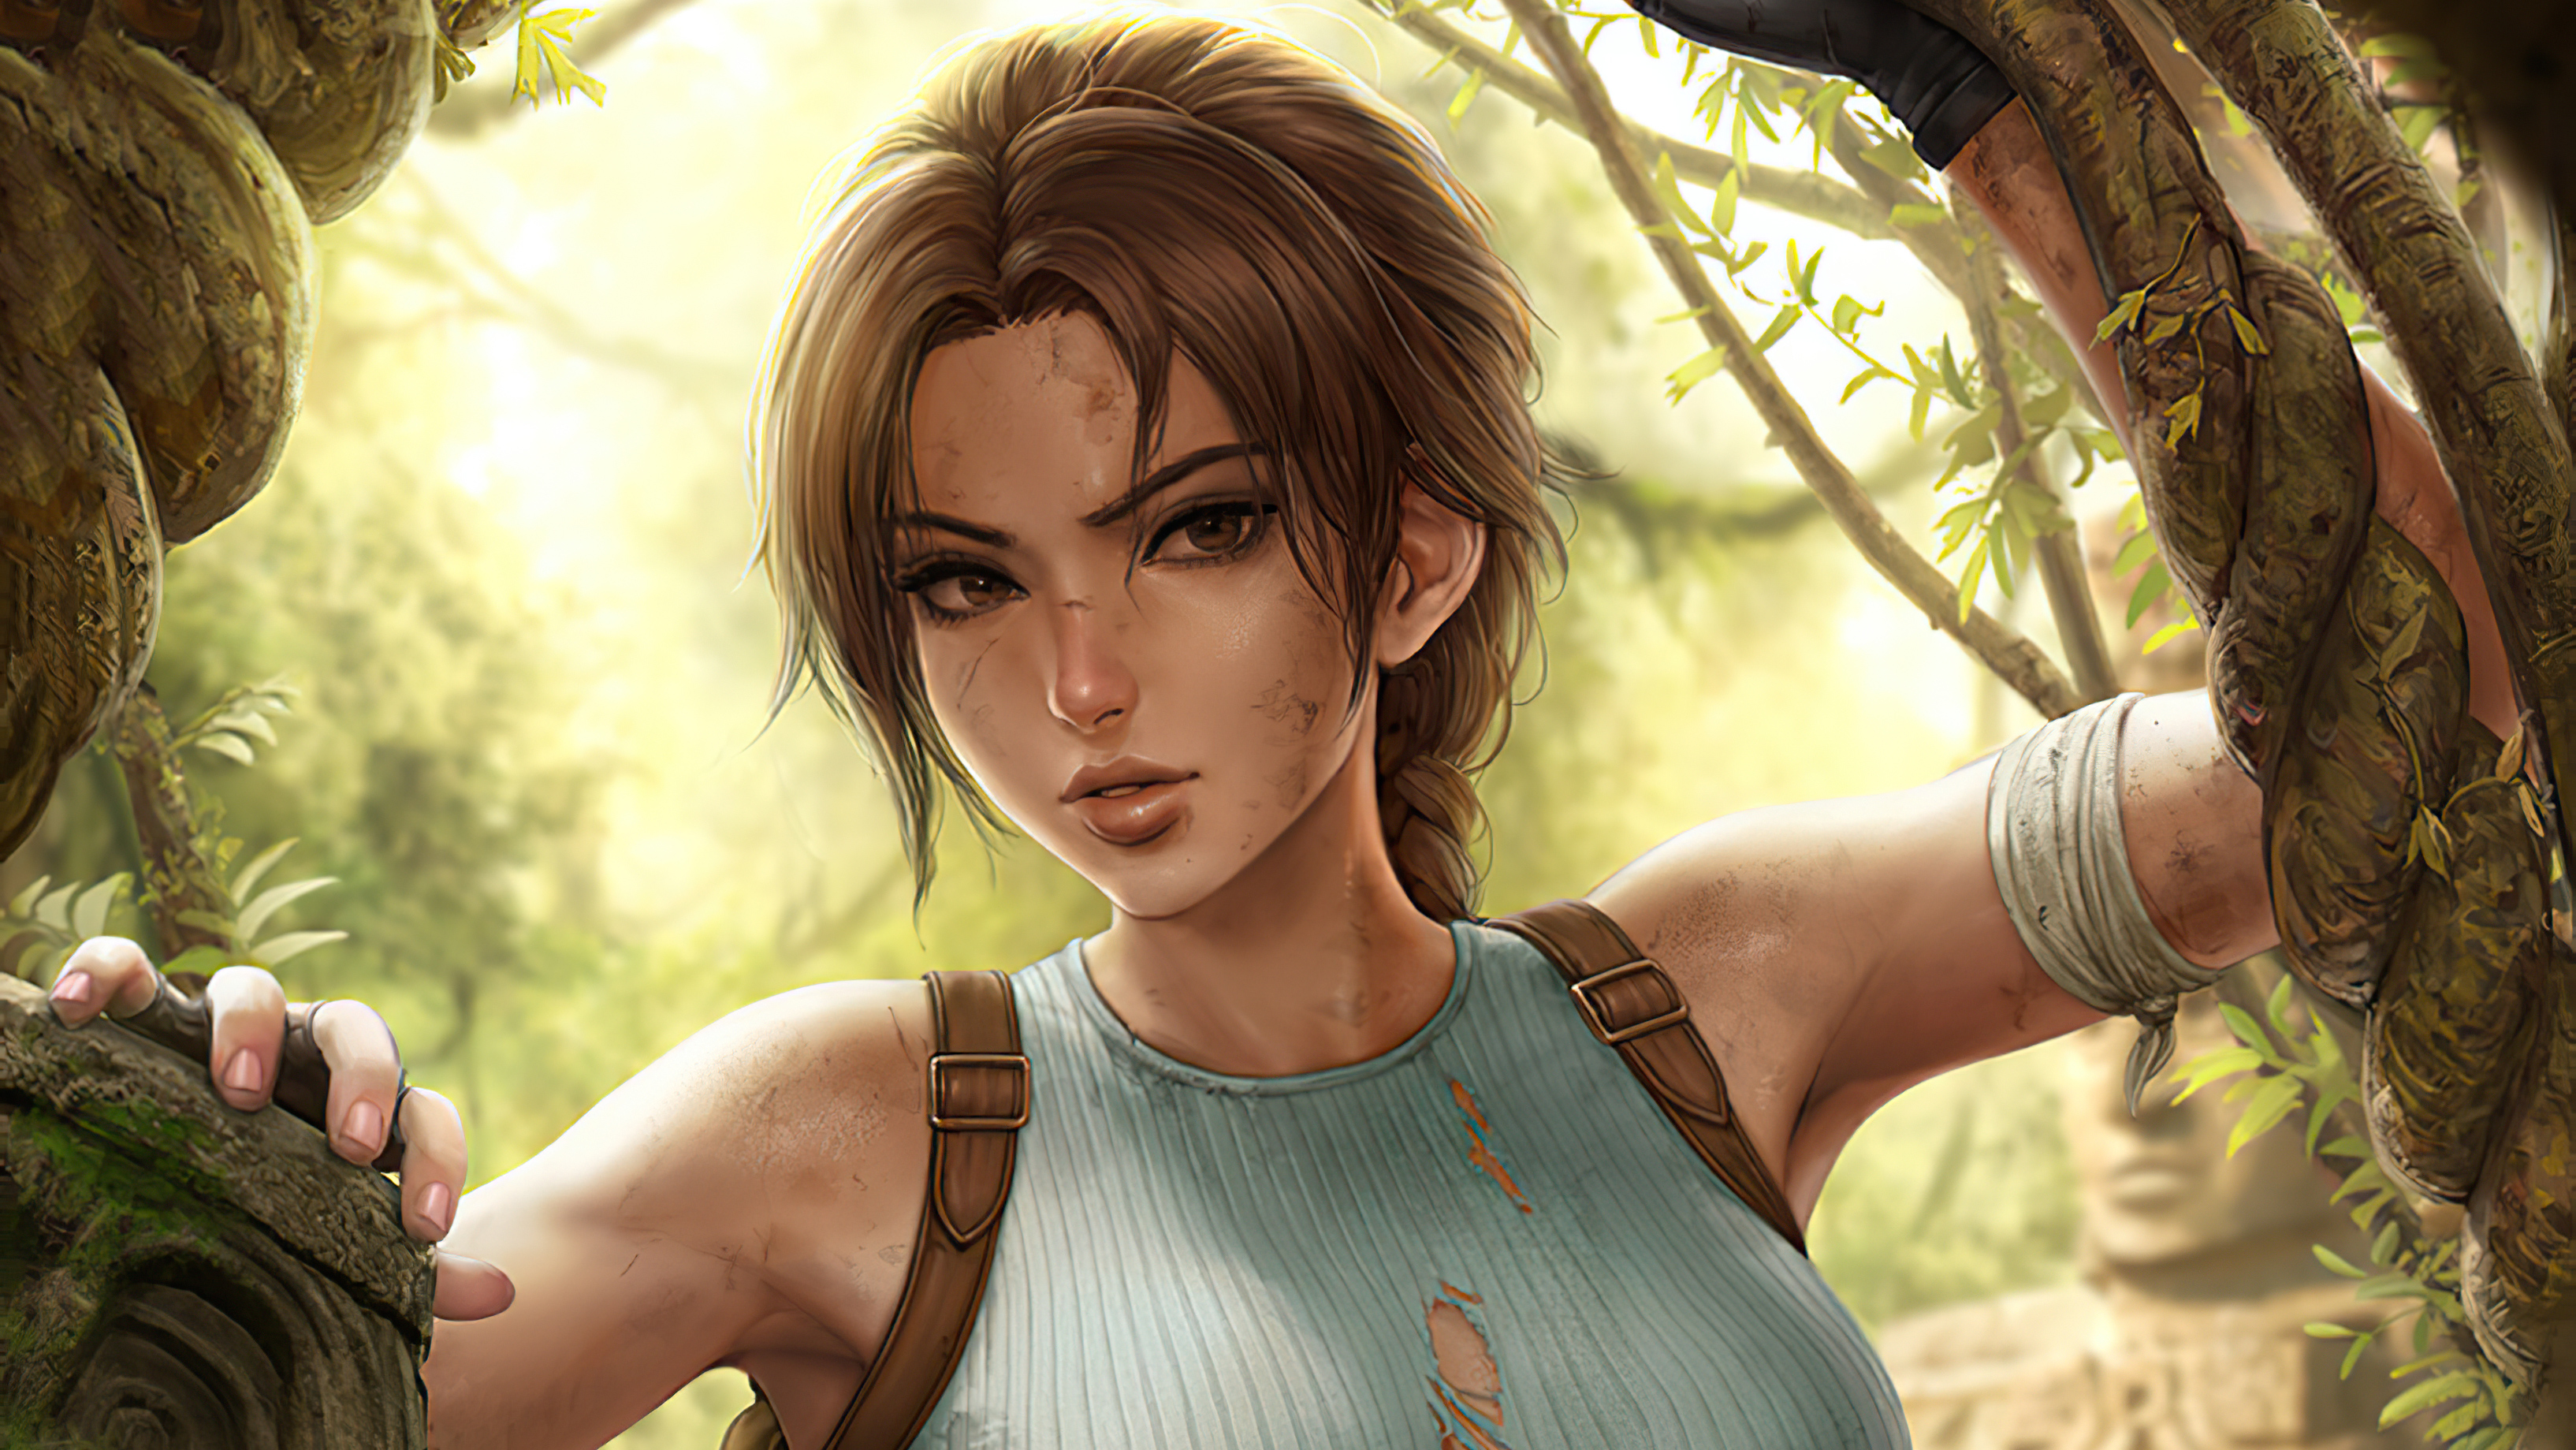 Lara Croft 3268x1839.